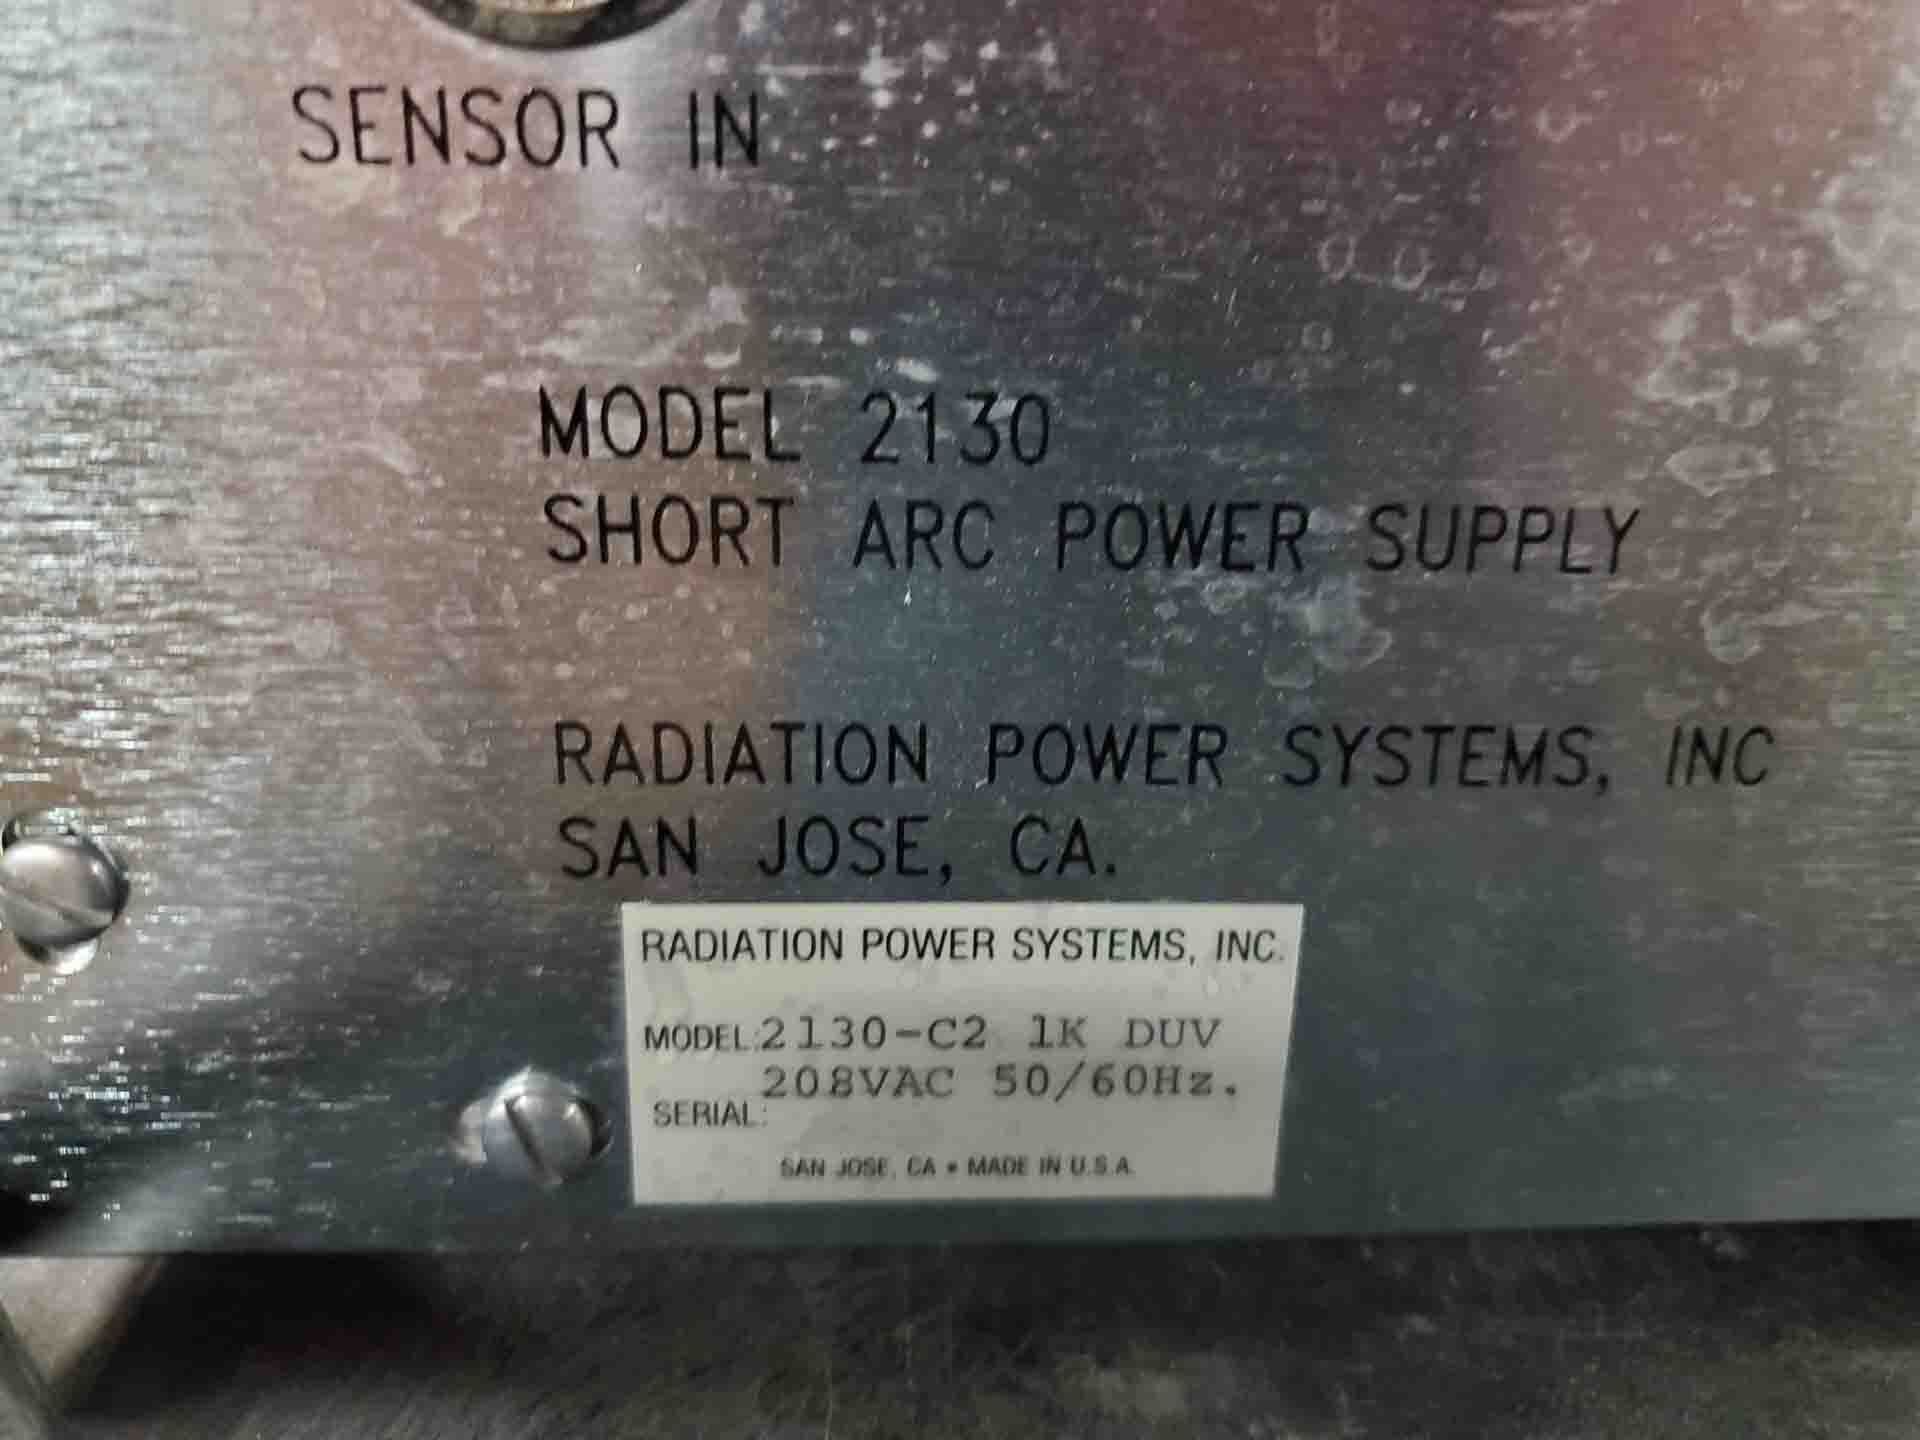 图为 已使用的 RADIATION POWER SYSTEMS 2130-C2 待售